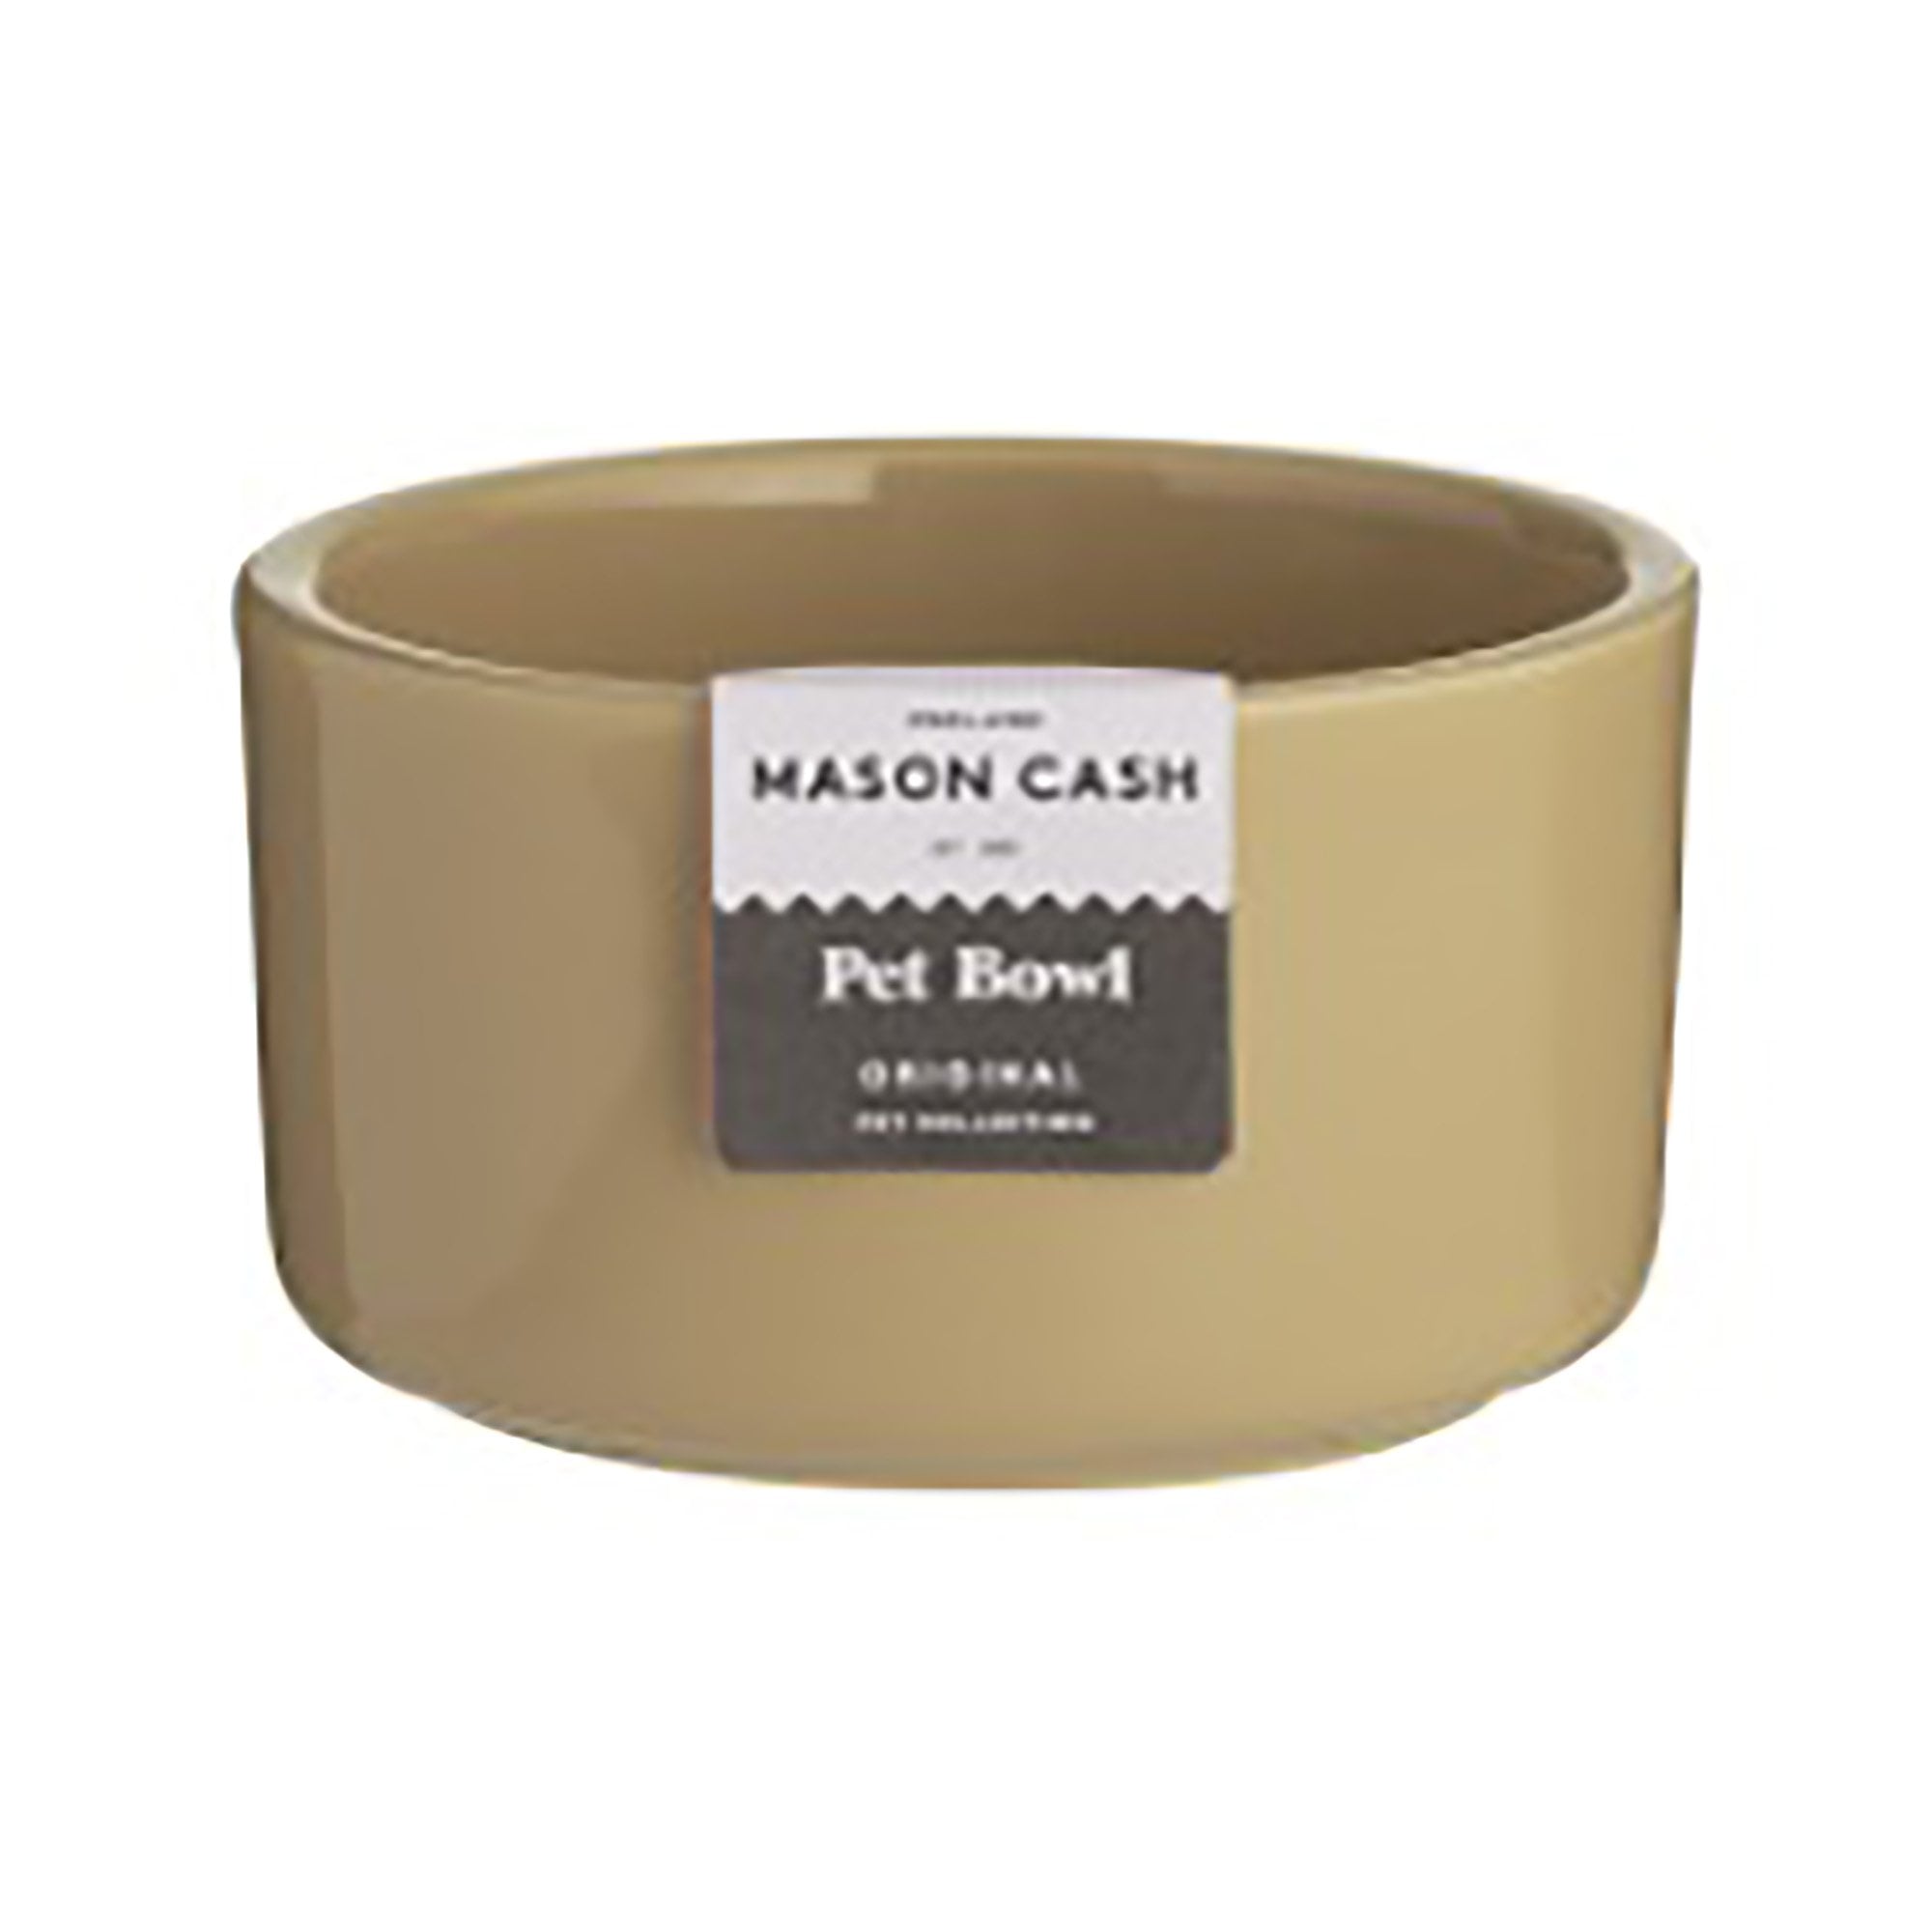 Mason Cash Ceramic Small Animal Pet Bowl 8cm RRP £4.50 CLEARANCE XL £3.49